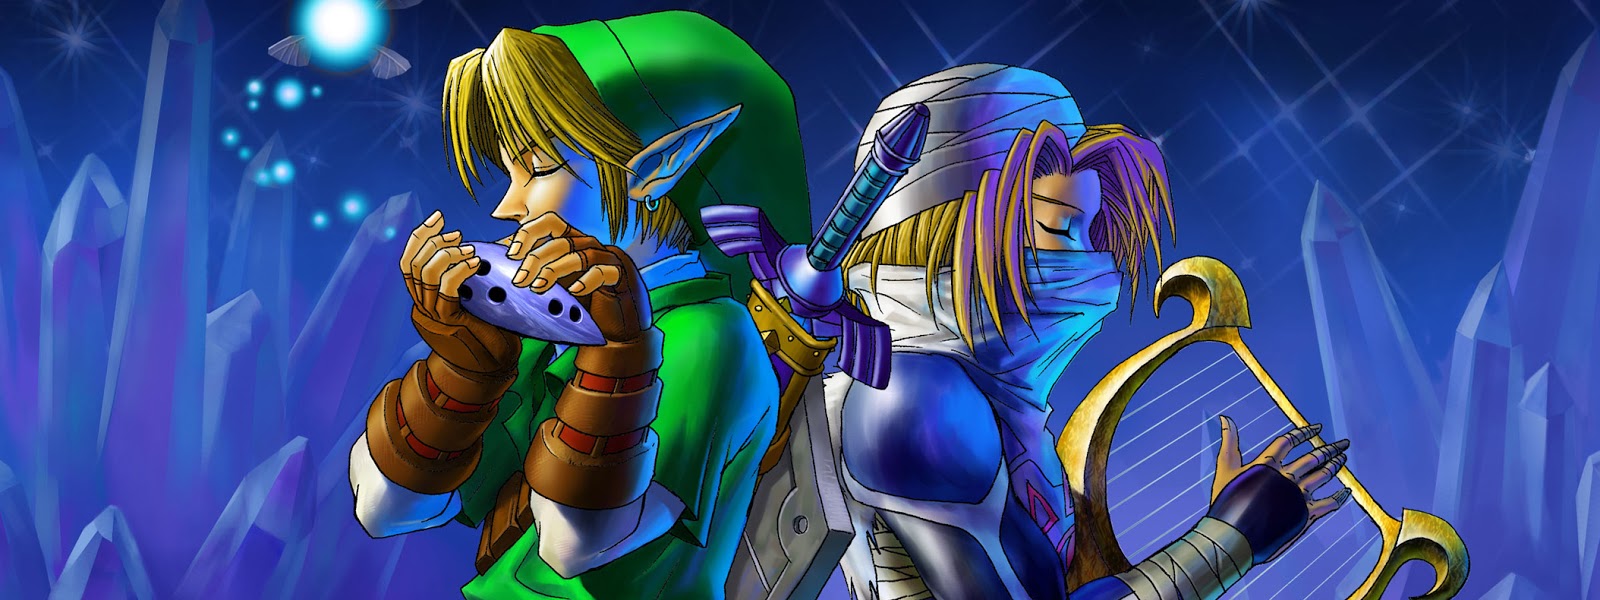 Free download Zelda Ocarina Of Time 3ds Wallpaper Hd wallpapers